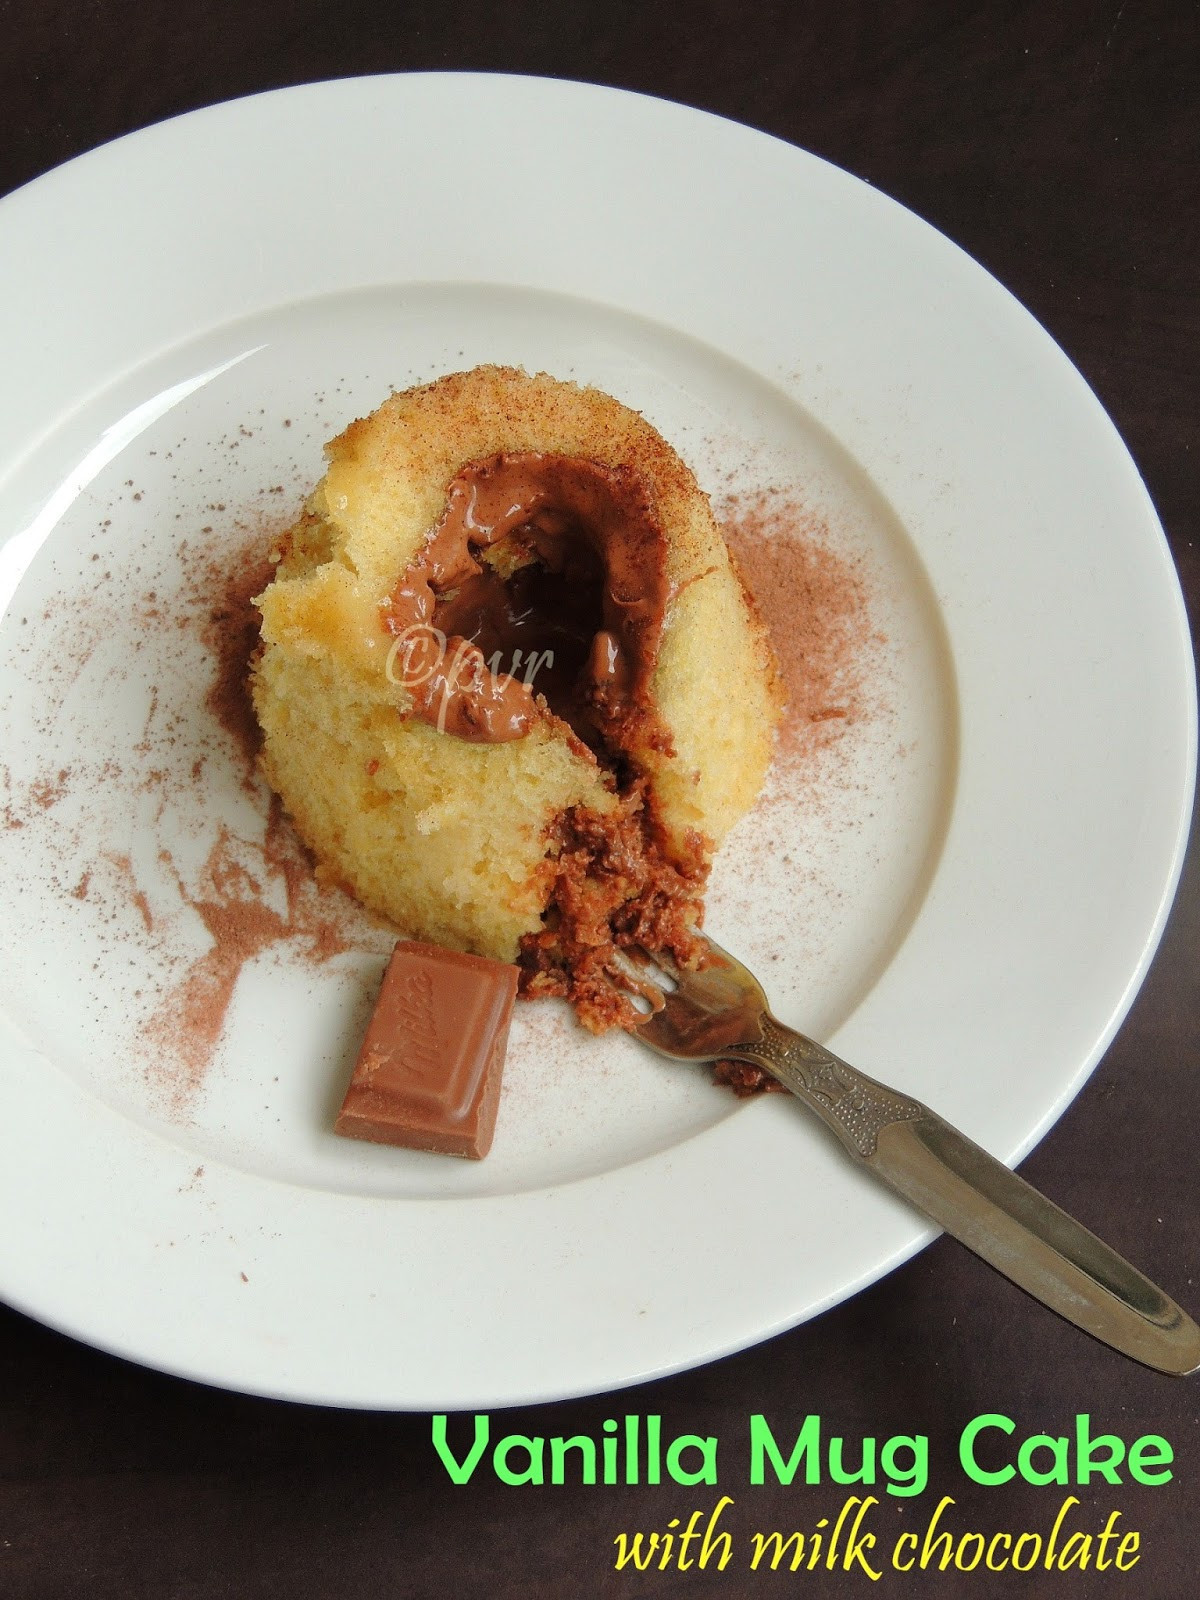 Mug Cake Vanilla
 Priya s Versatile Recipes Eggless Vanilla Mug Cake with